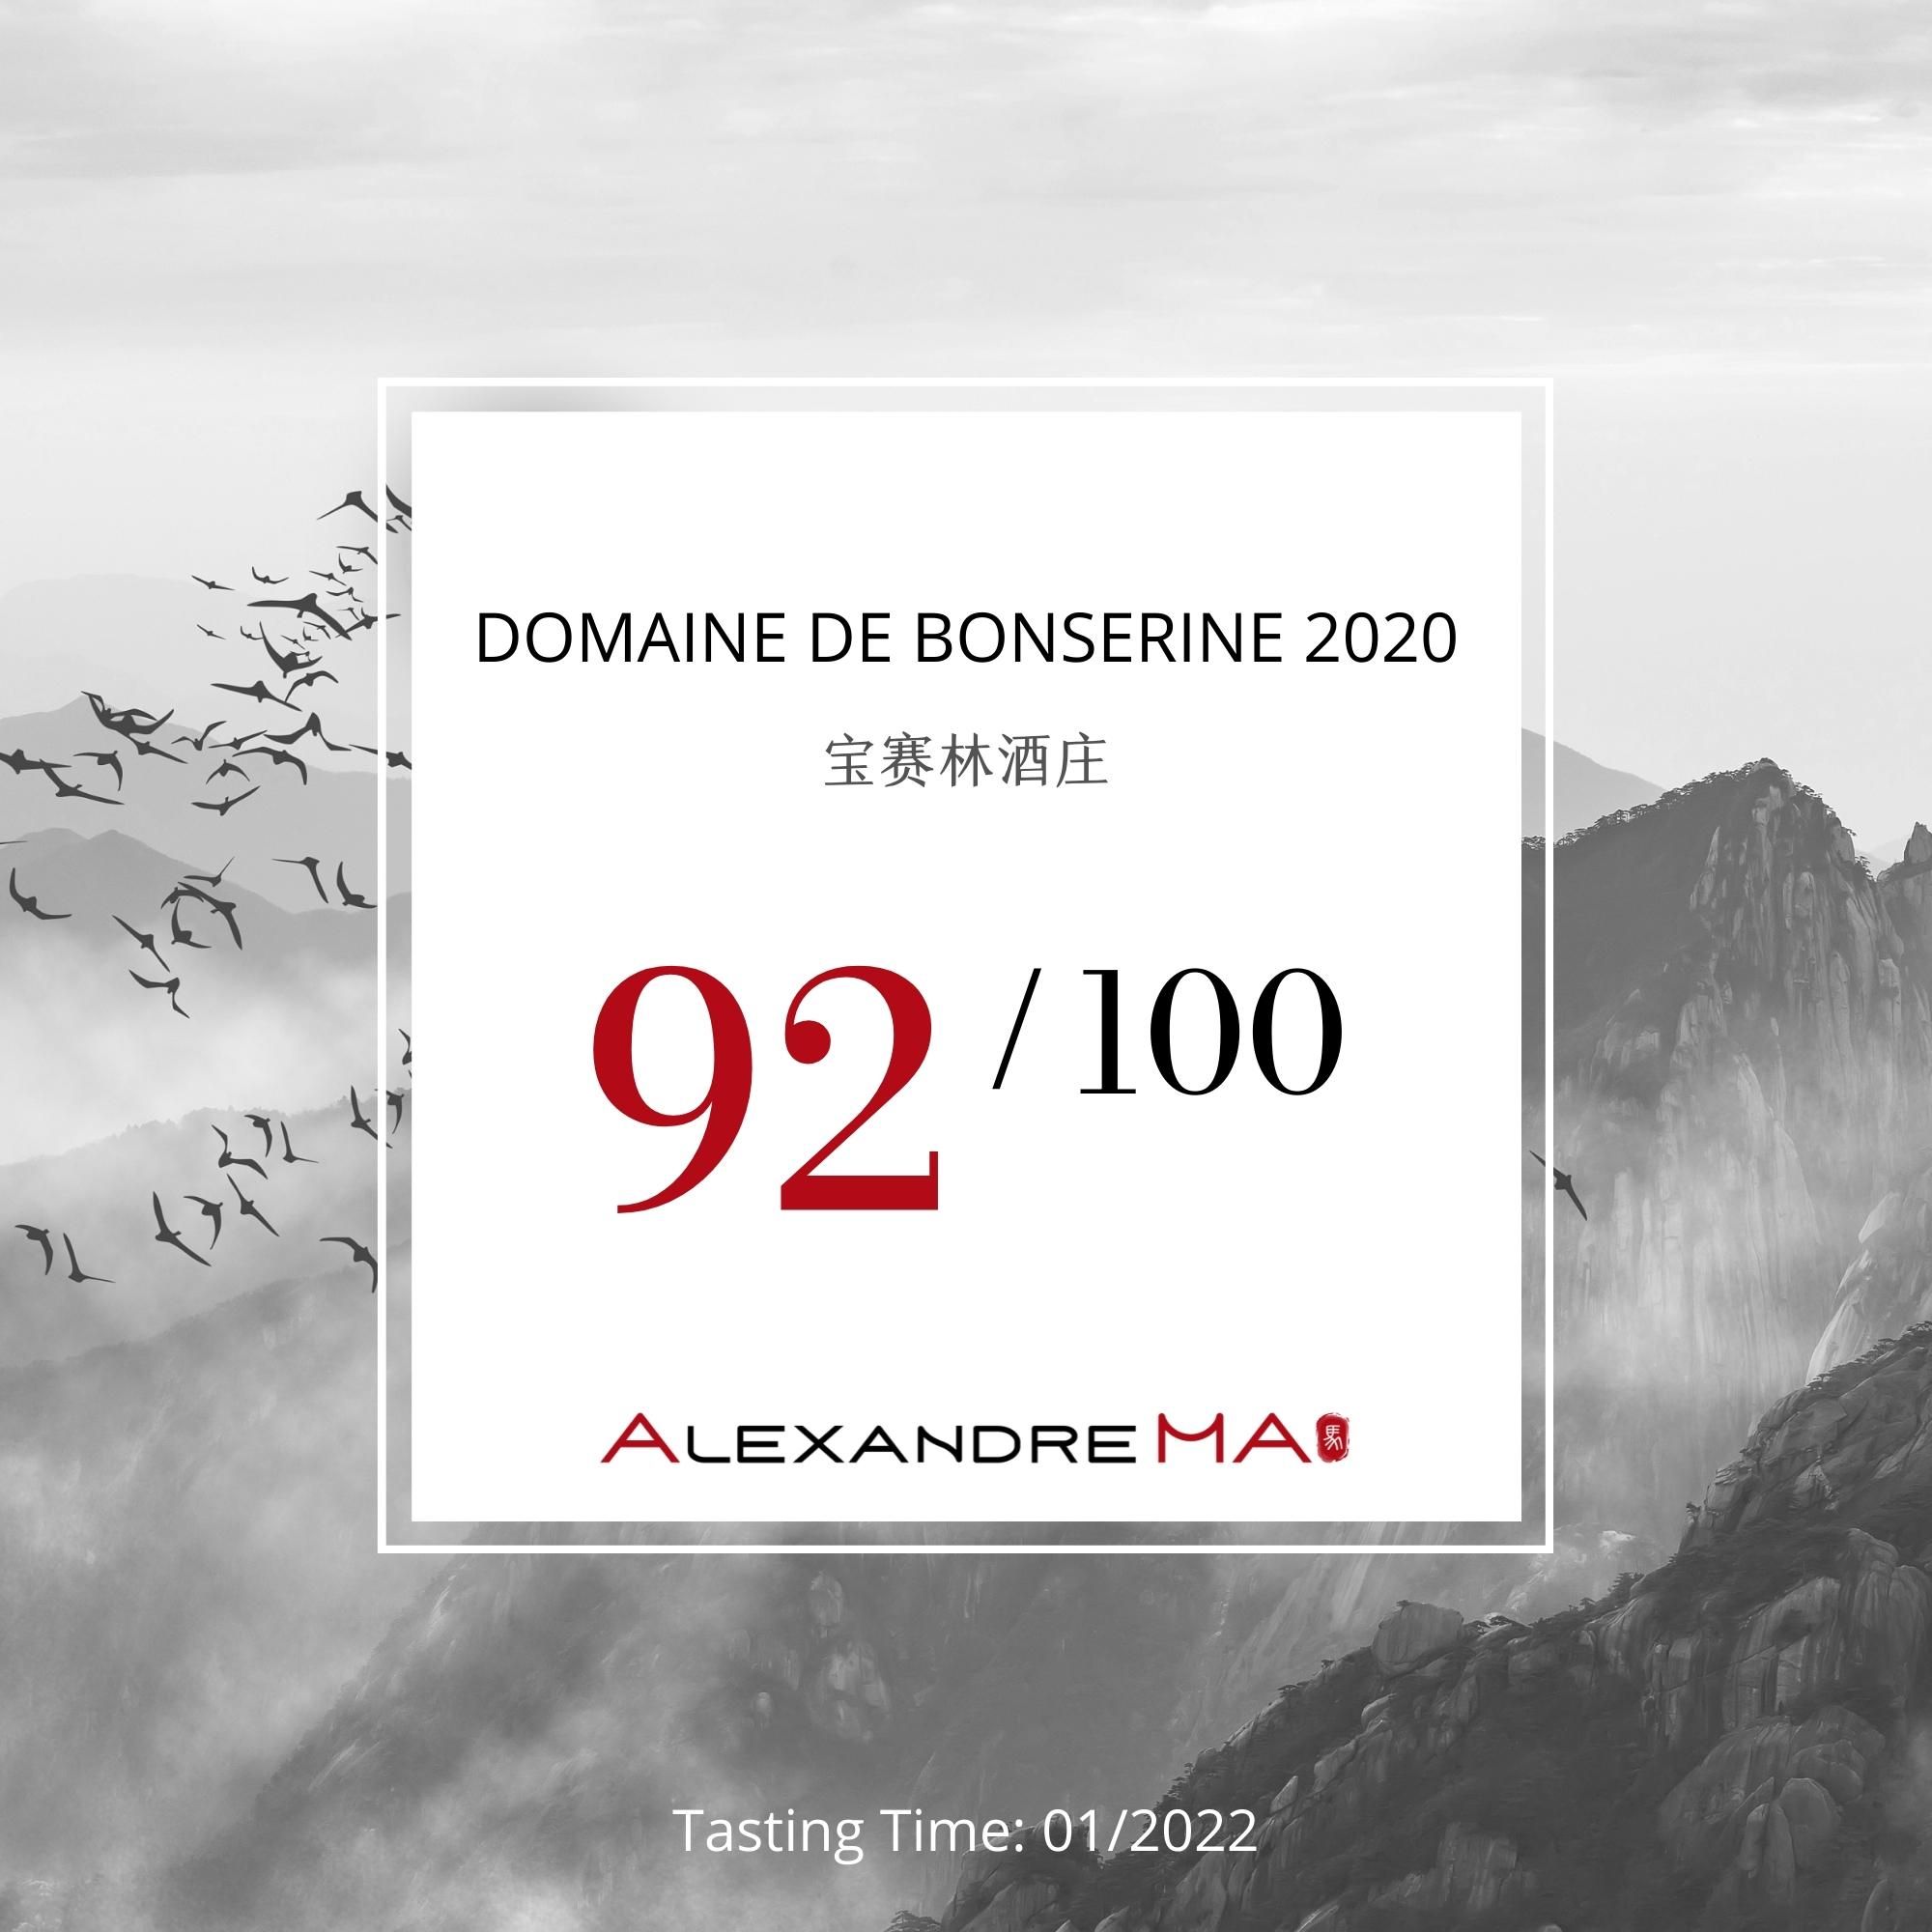 Domaine de Bonserine 2020 - Alexandre MA